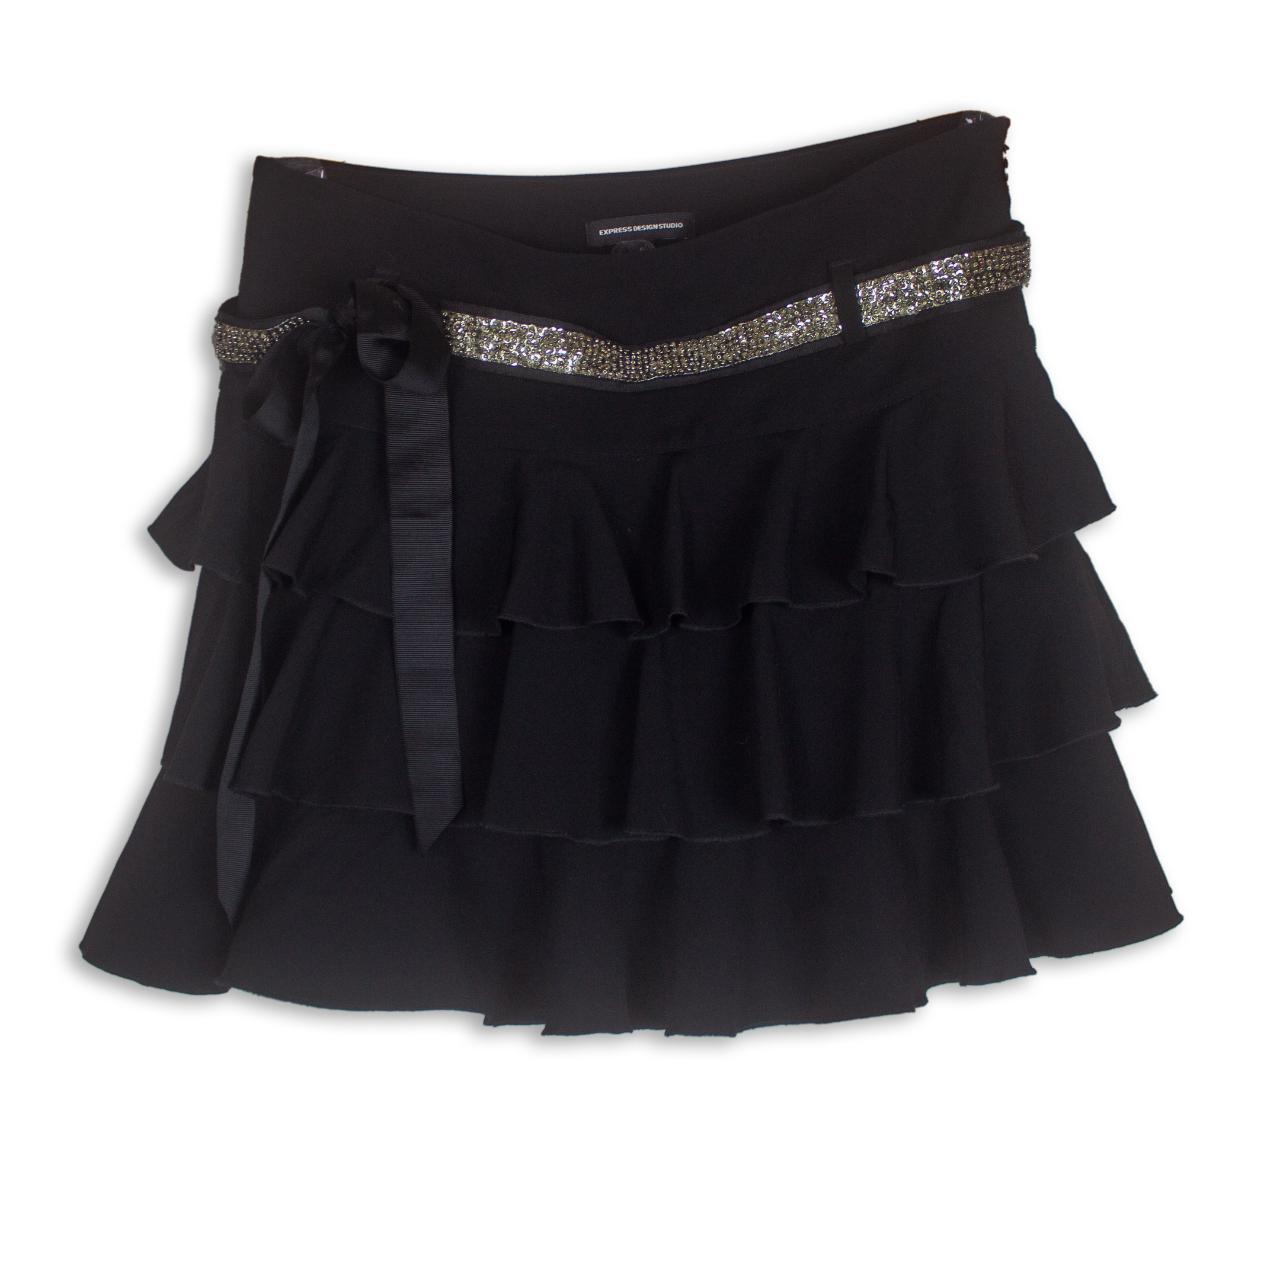 Vintage Y2k Ruffle Ballet Core Skirt with Satin... - Depop